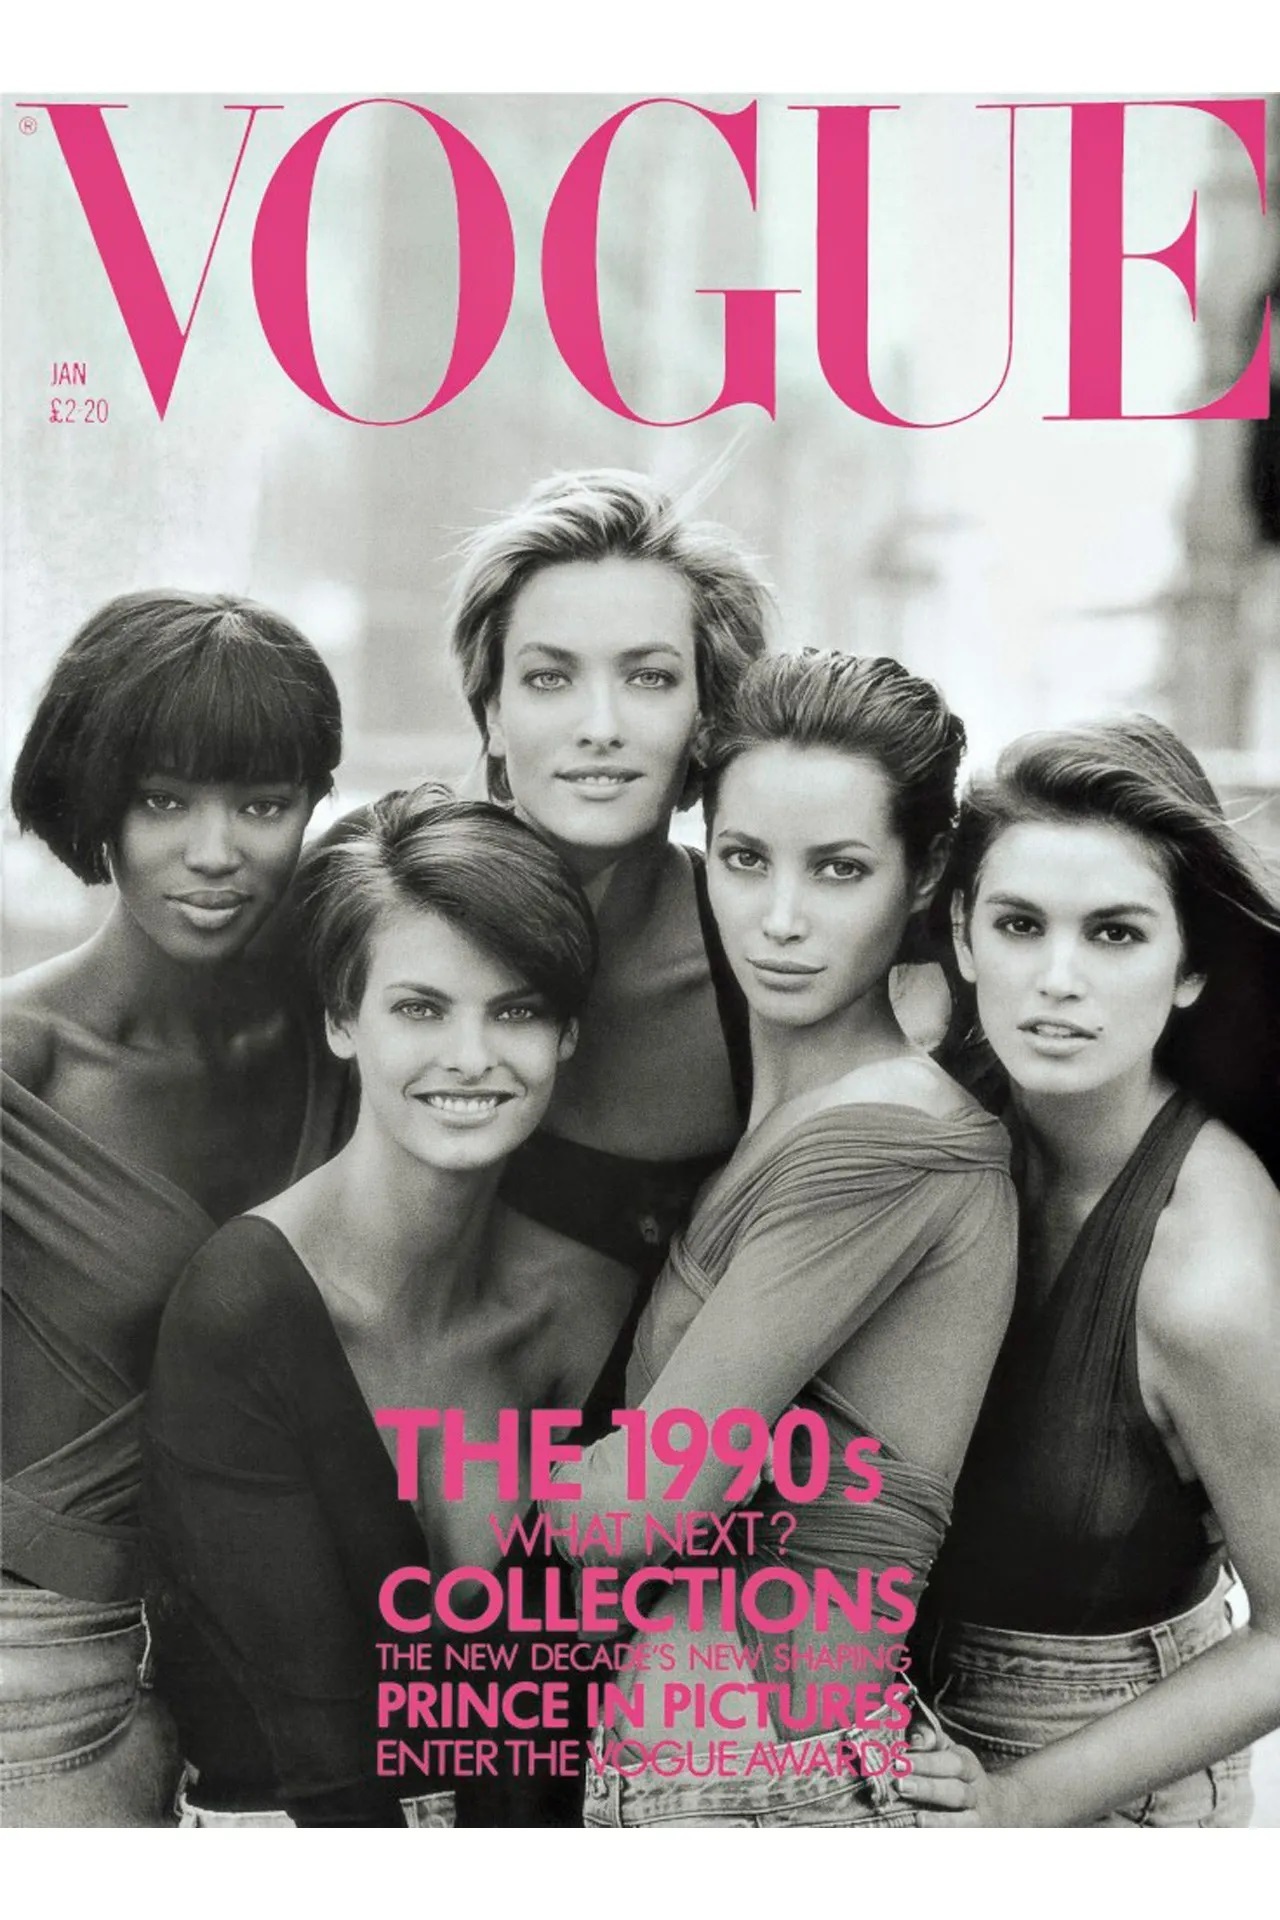 La mtica portada de 'Vogue' del fotgrafo Peter Lindbergh, publicada en enero de 1990.